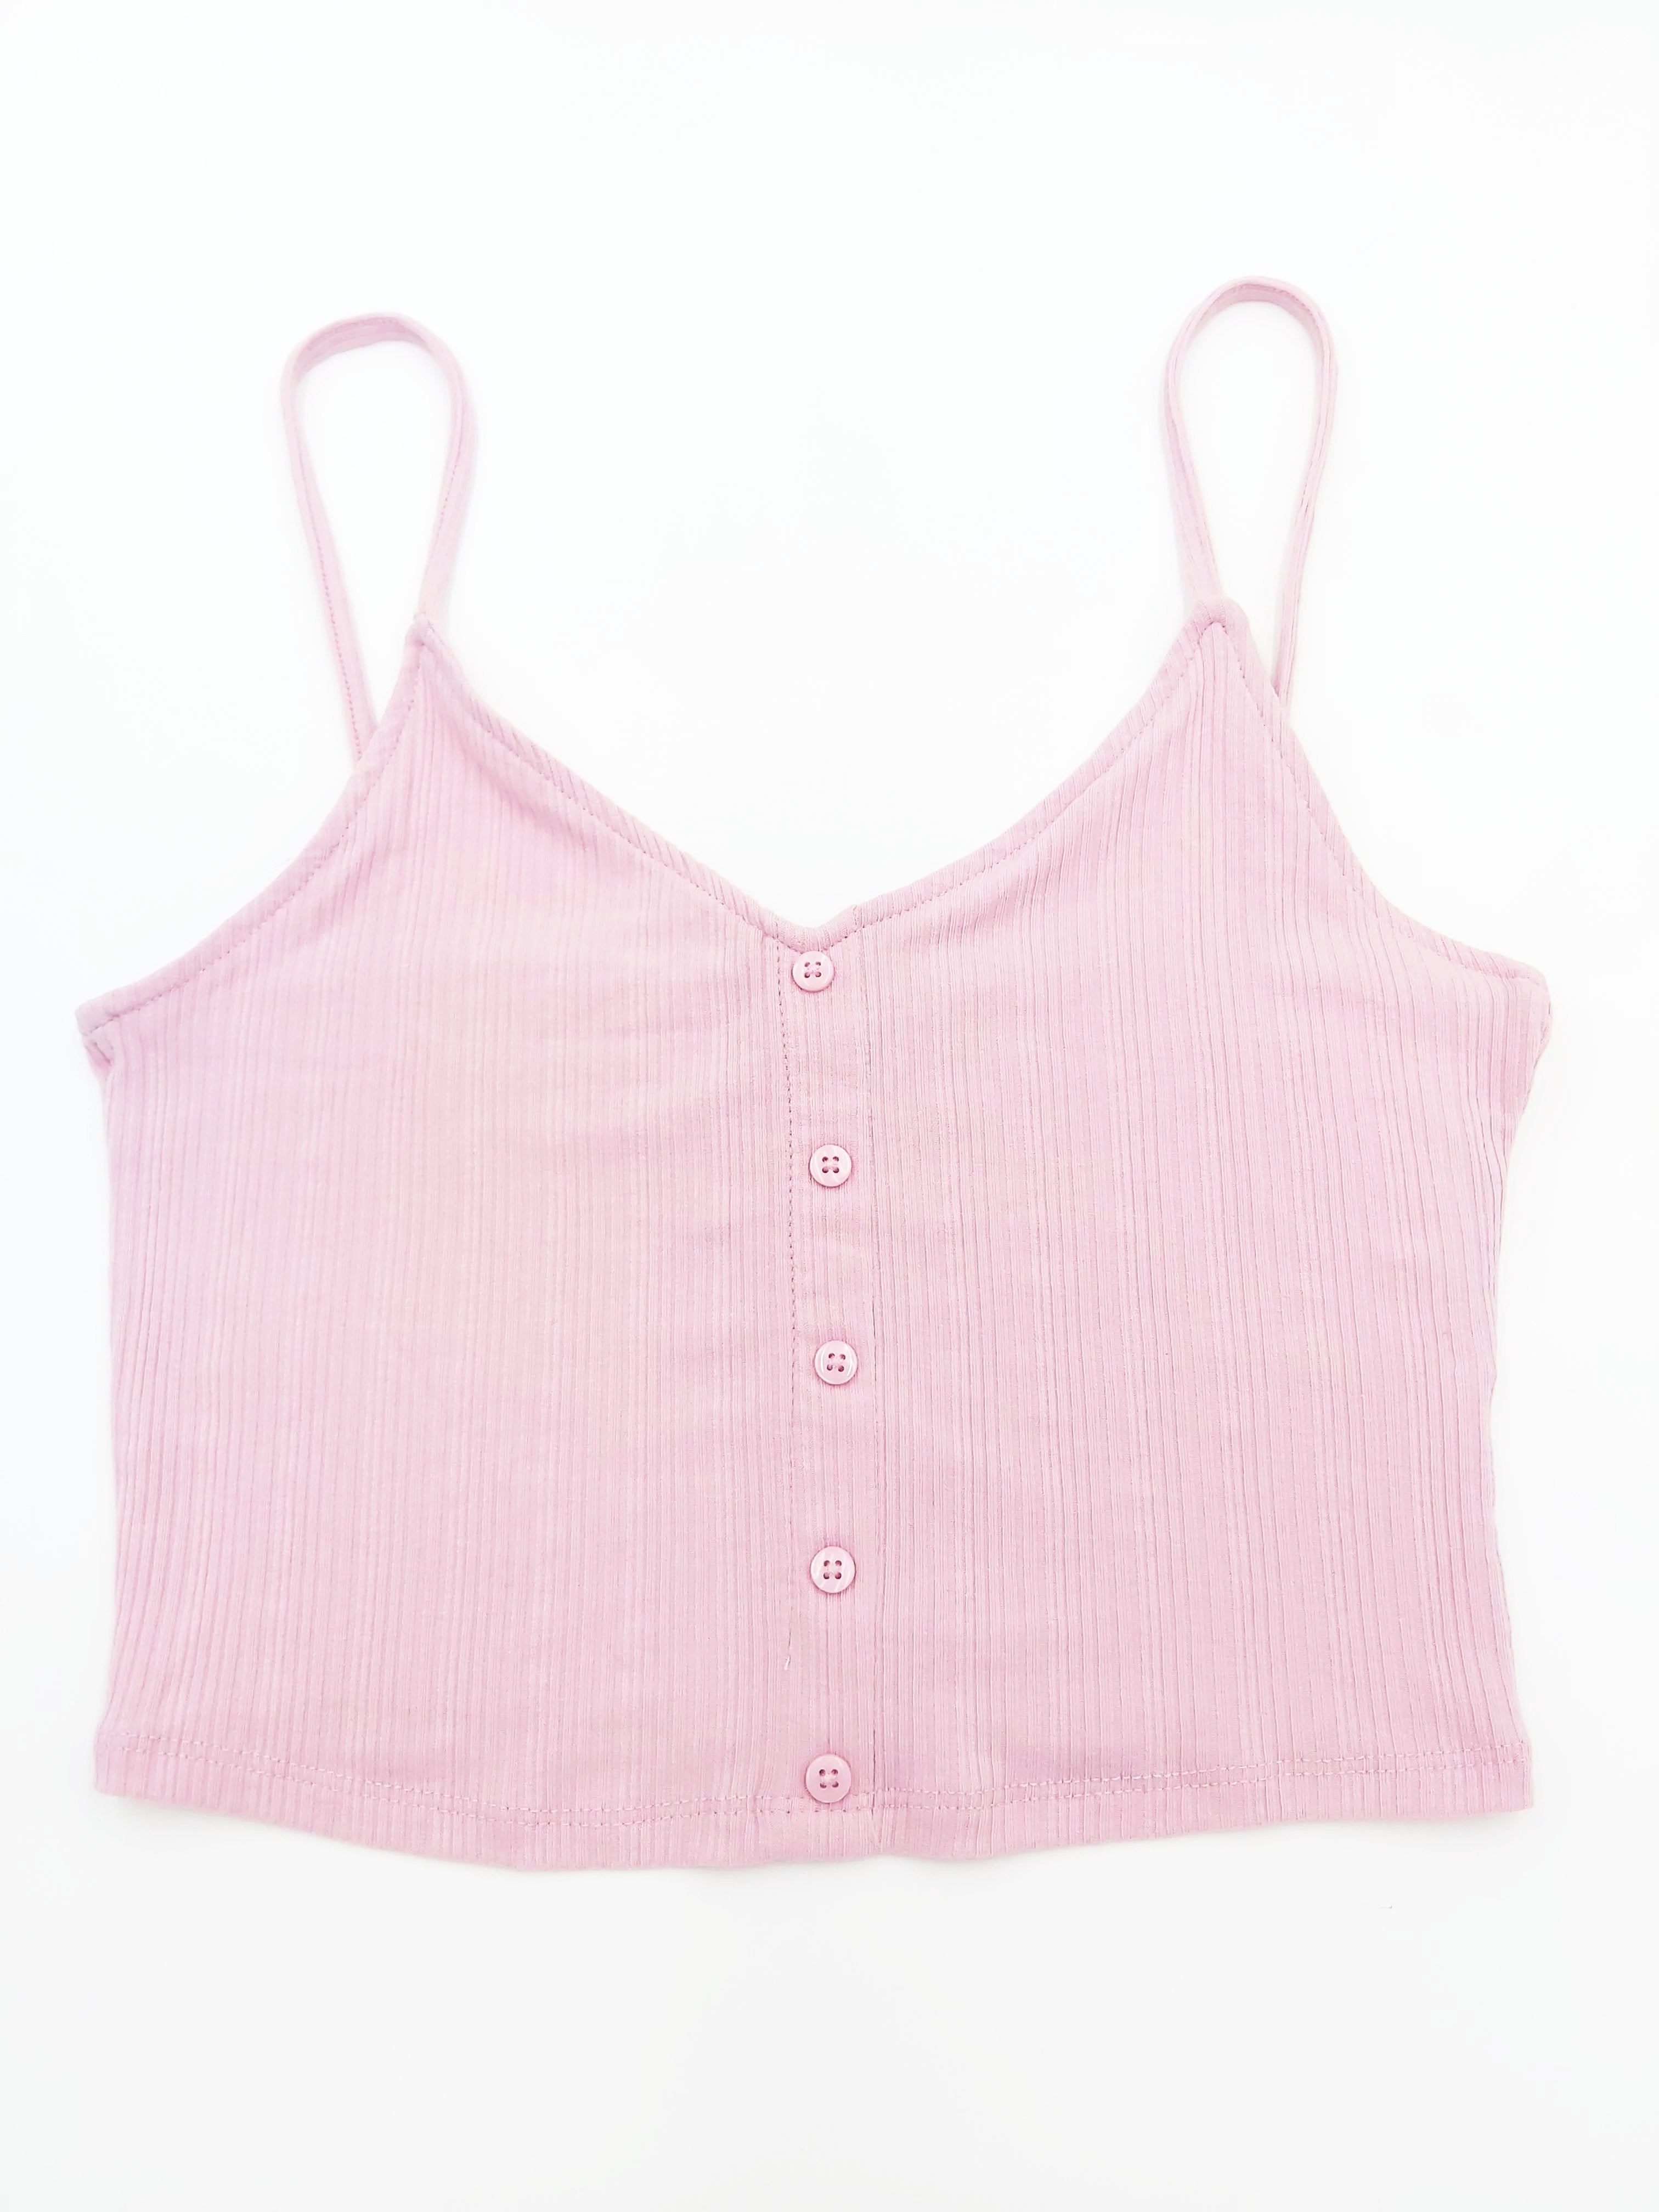 Cropped Pink Vest Top